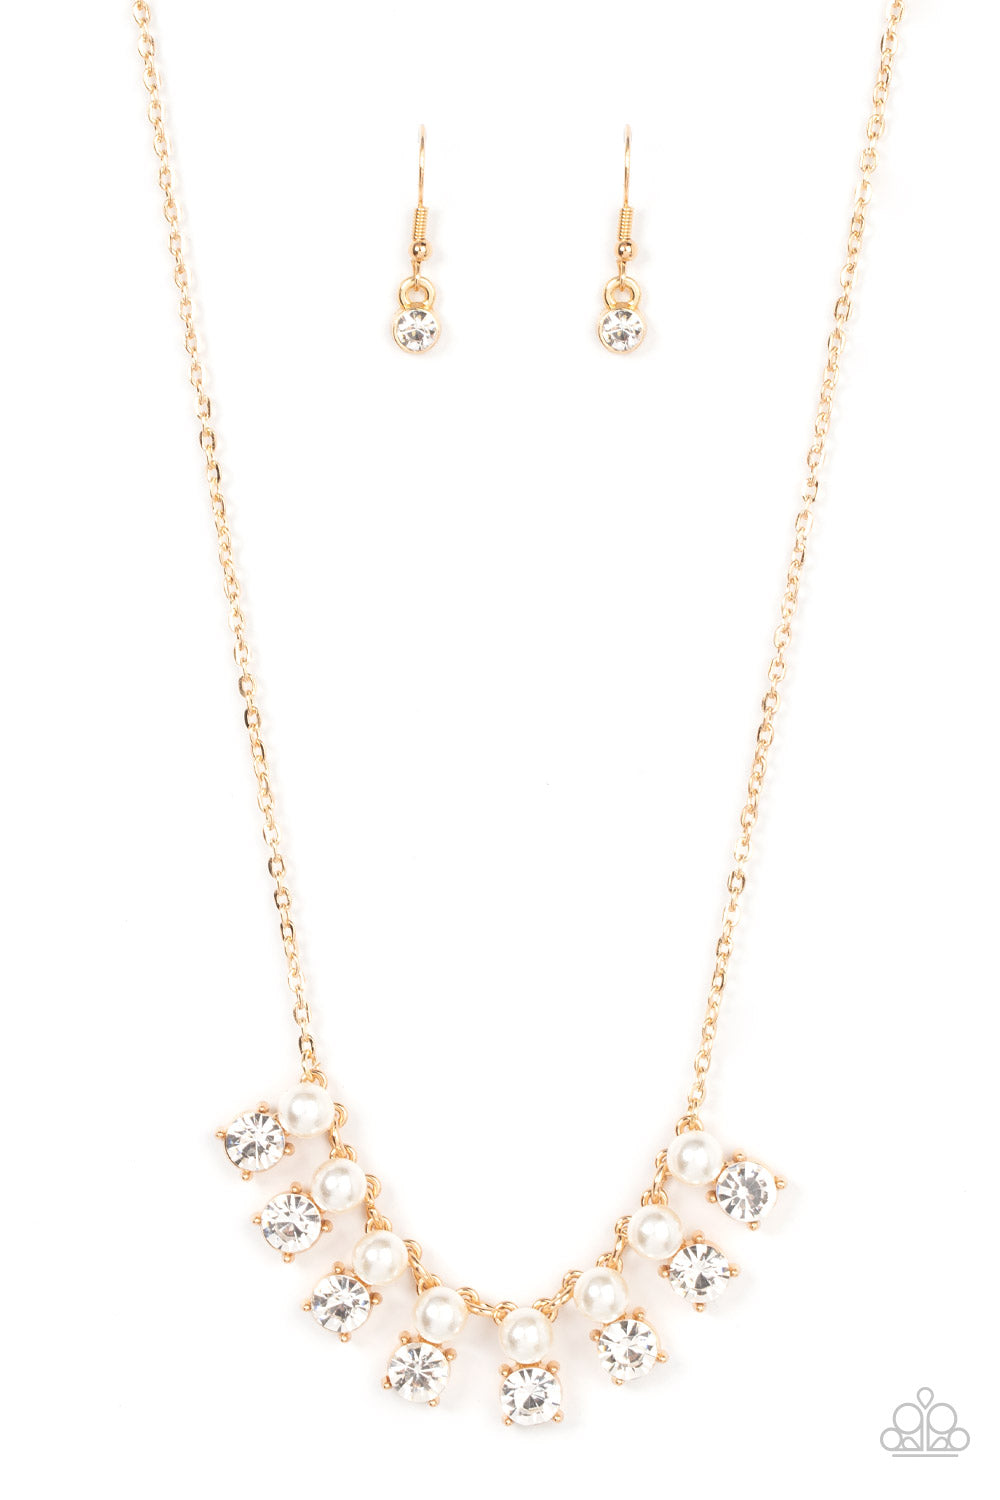 Paparazzi Dashingly Duchess Gold Short Necklace - P2RE-GDXX-399XX